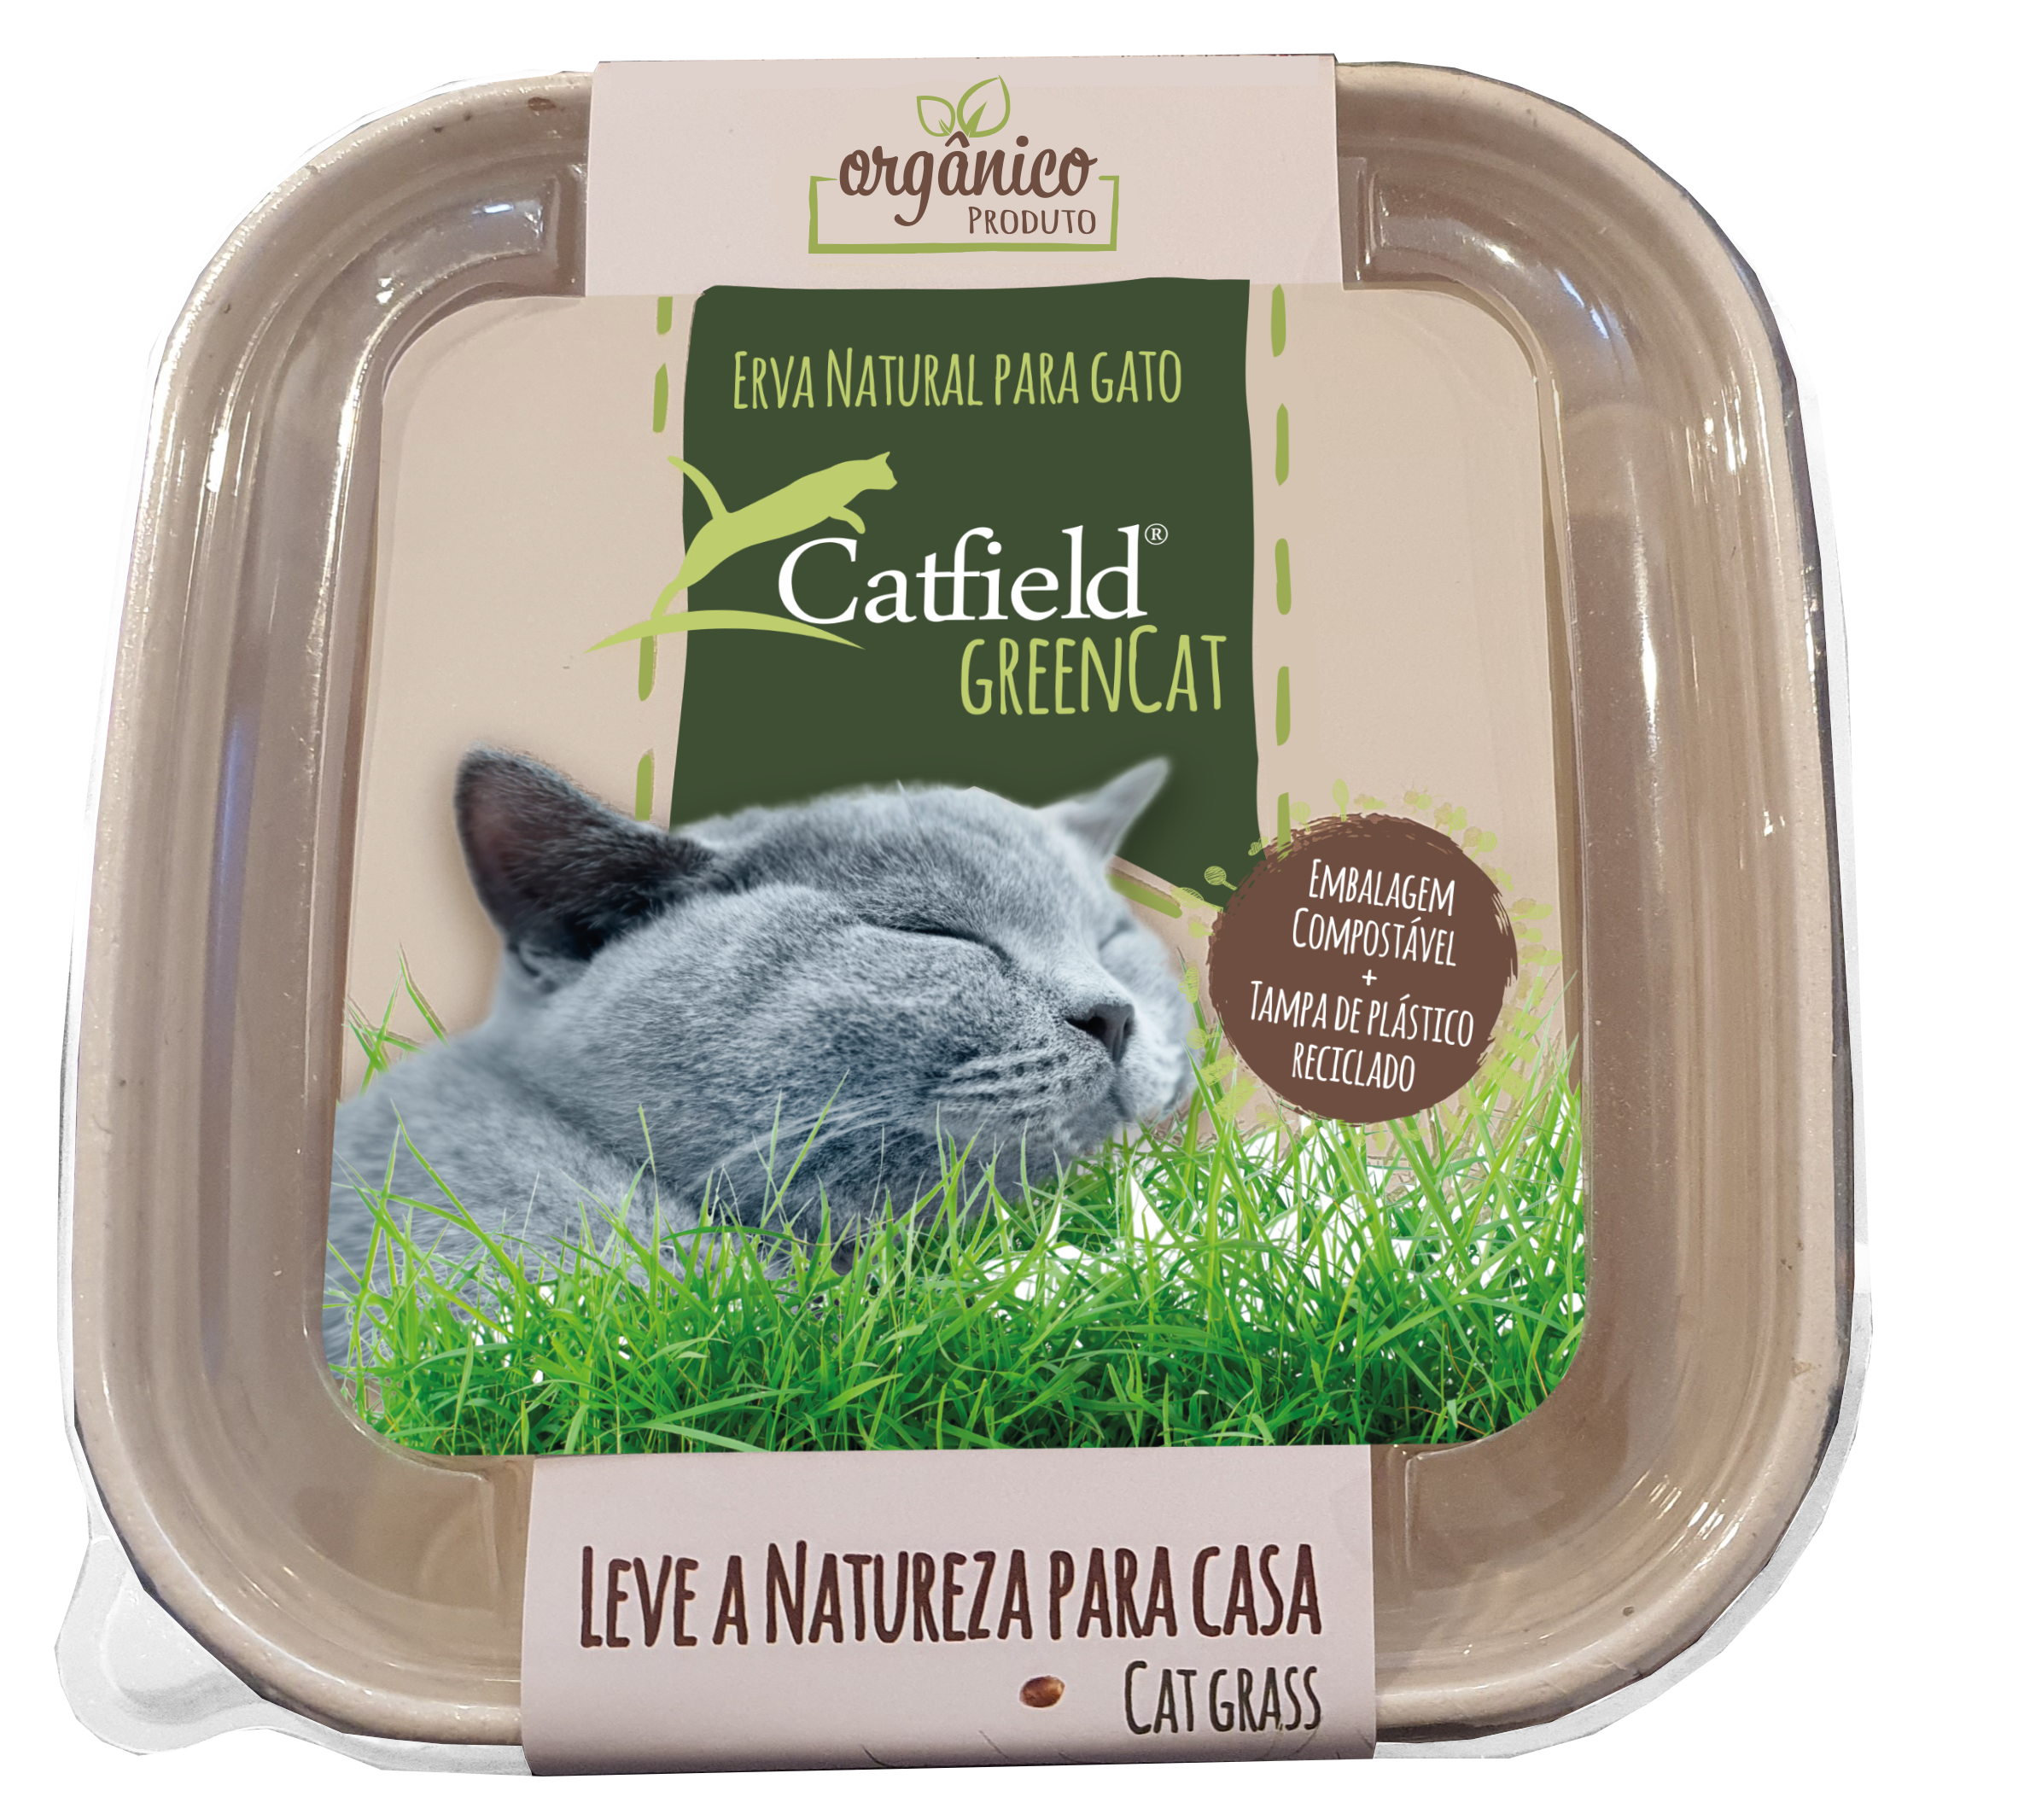 Catfield Green Cat - Chrysdietetic